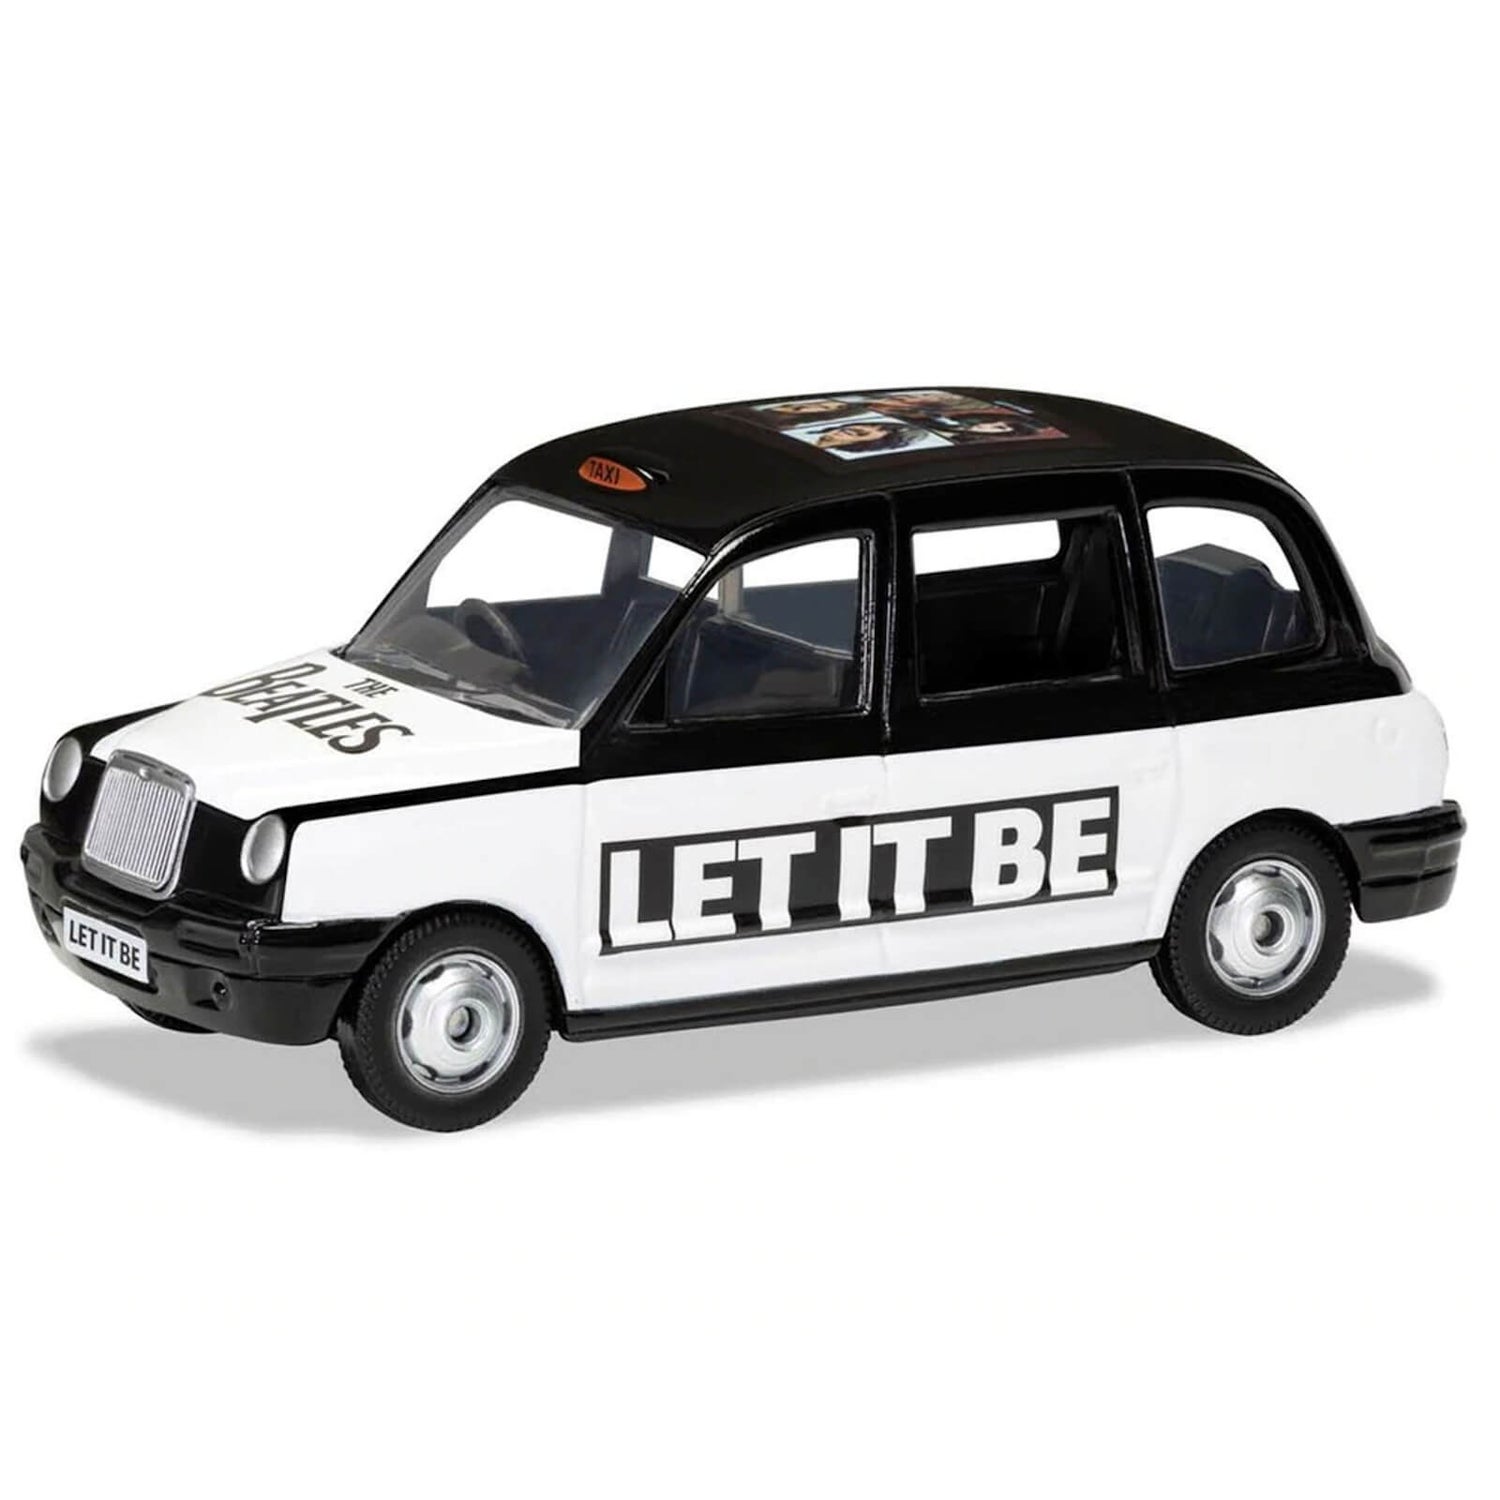 The Beatles London Taxi Let it Be Modellset im Maßstab 1:36